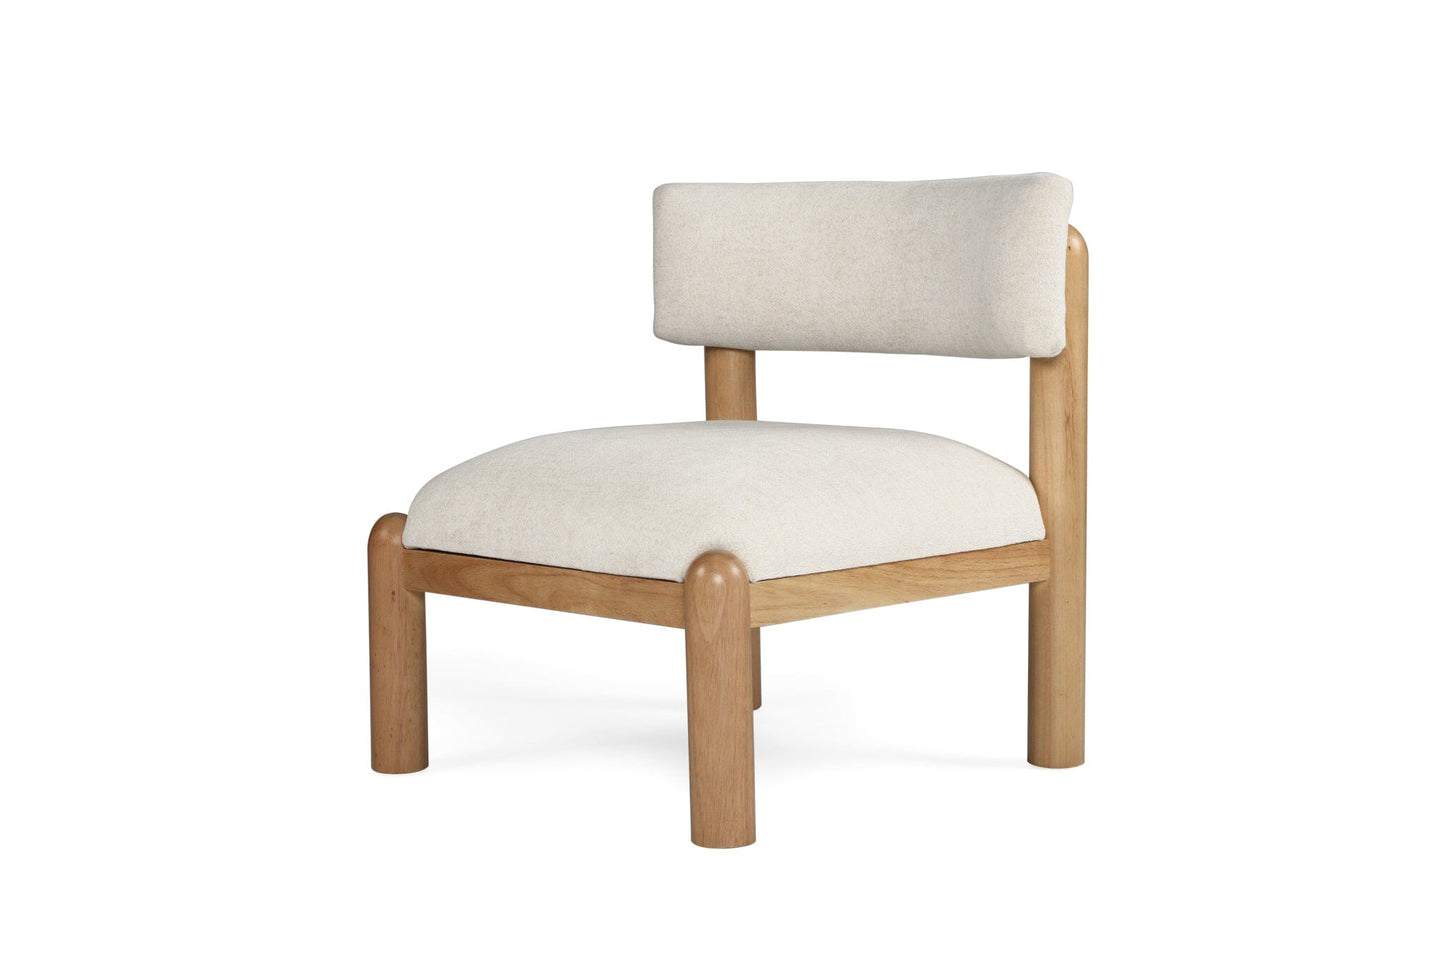 Oak Occasional Chair - Lykke Sun Republic 